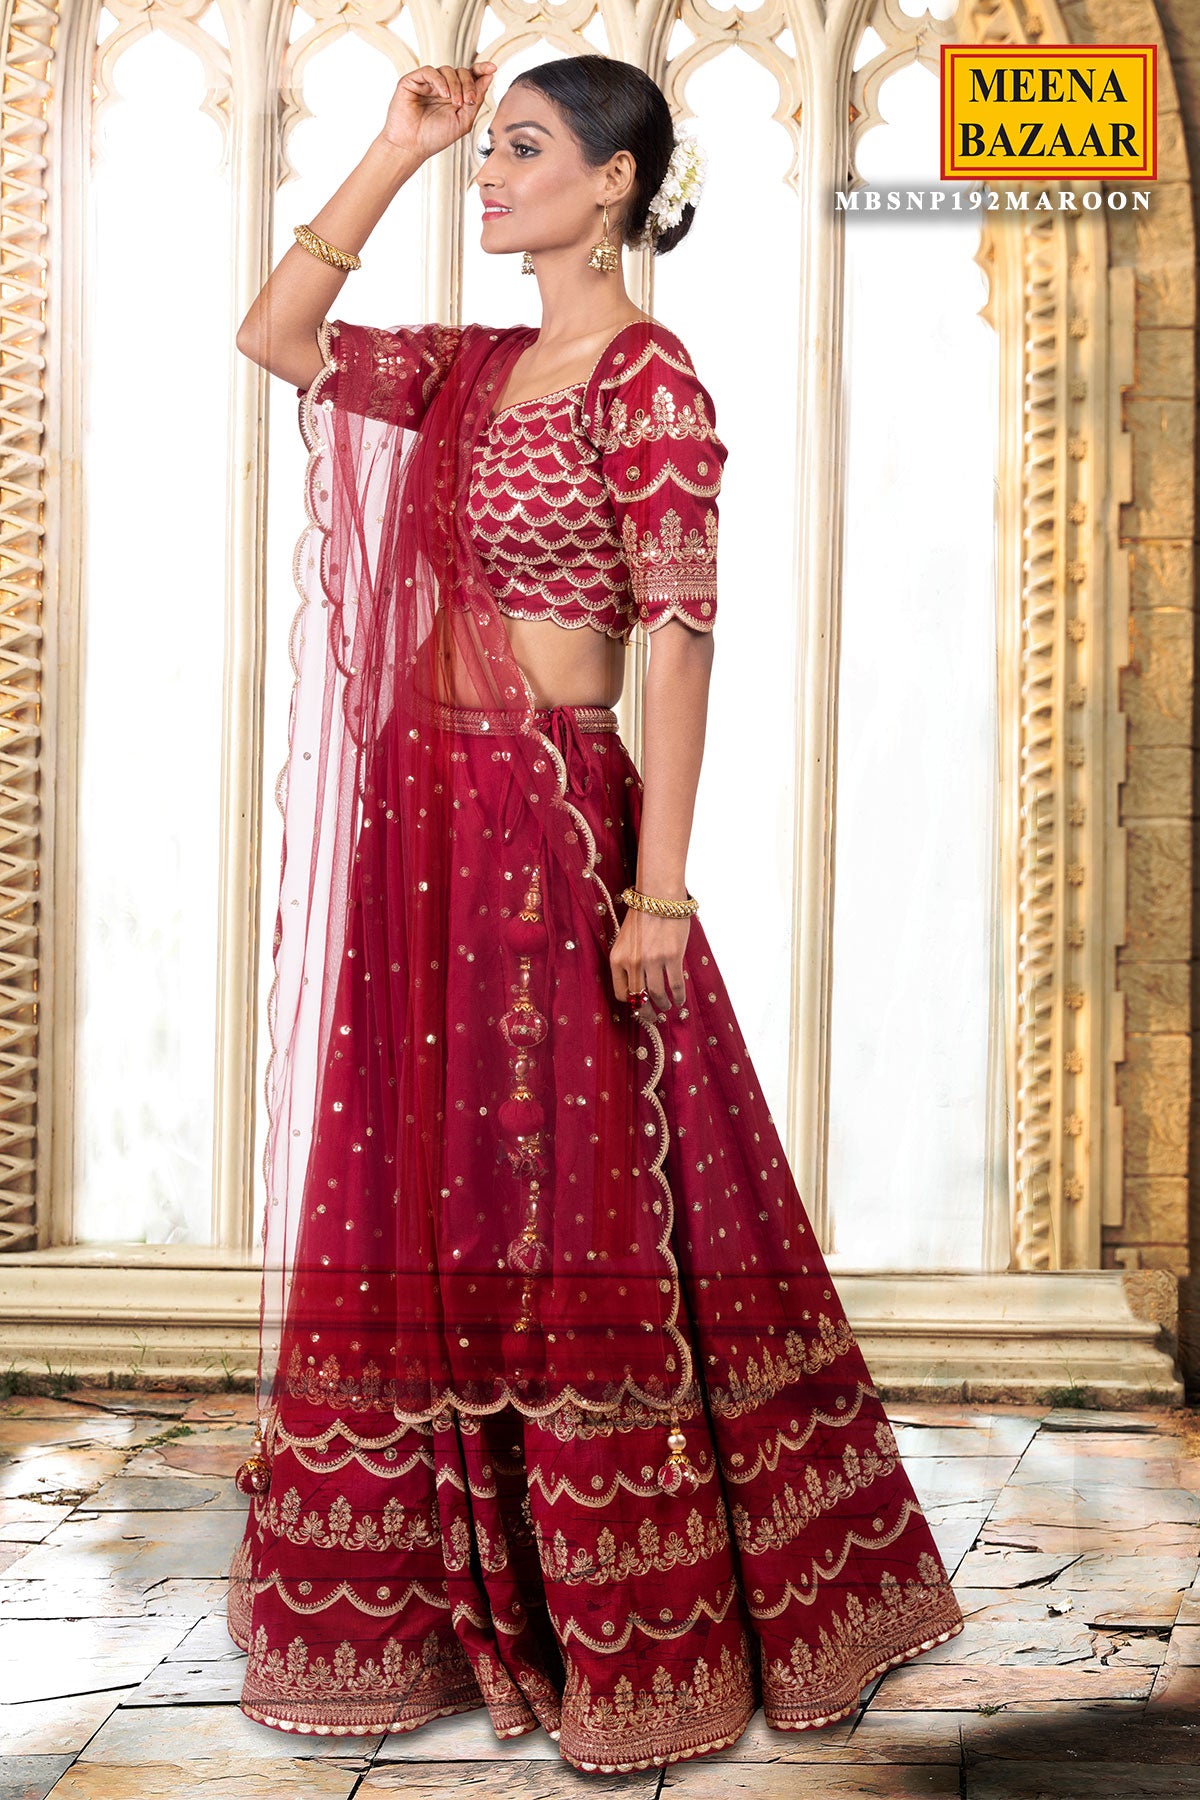 Meena Bazaar Pink Embroidered Lehenga : Amazon.in: Fashion